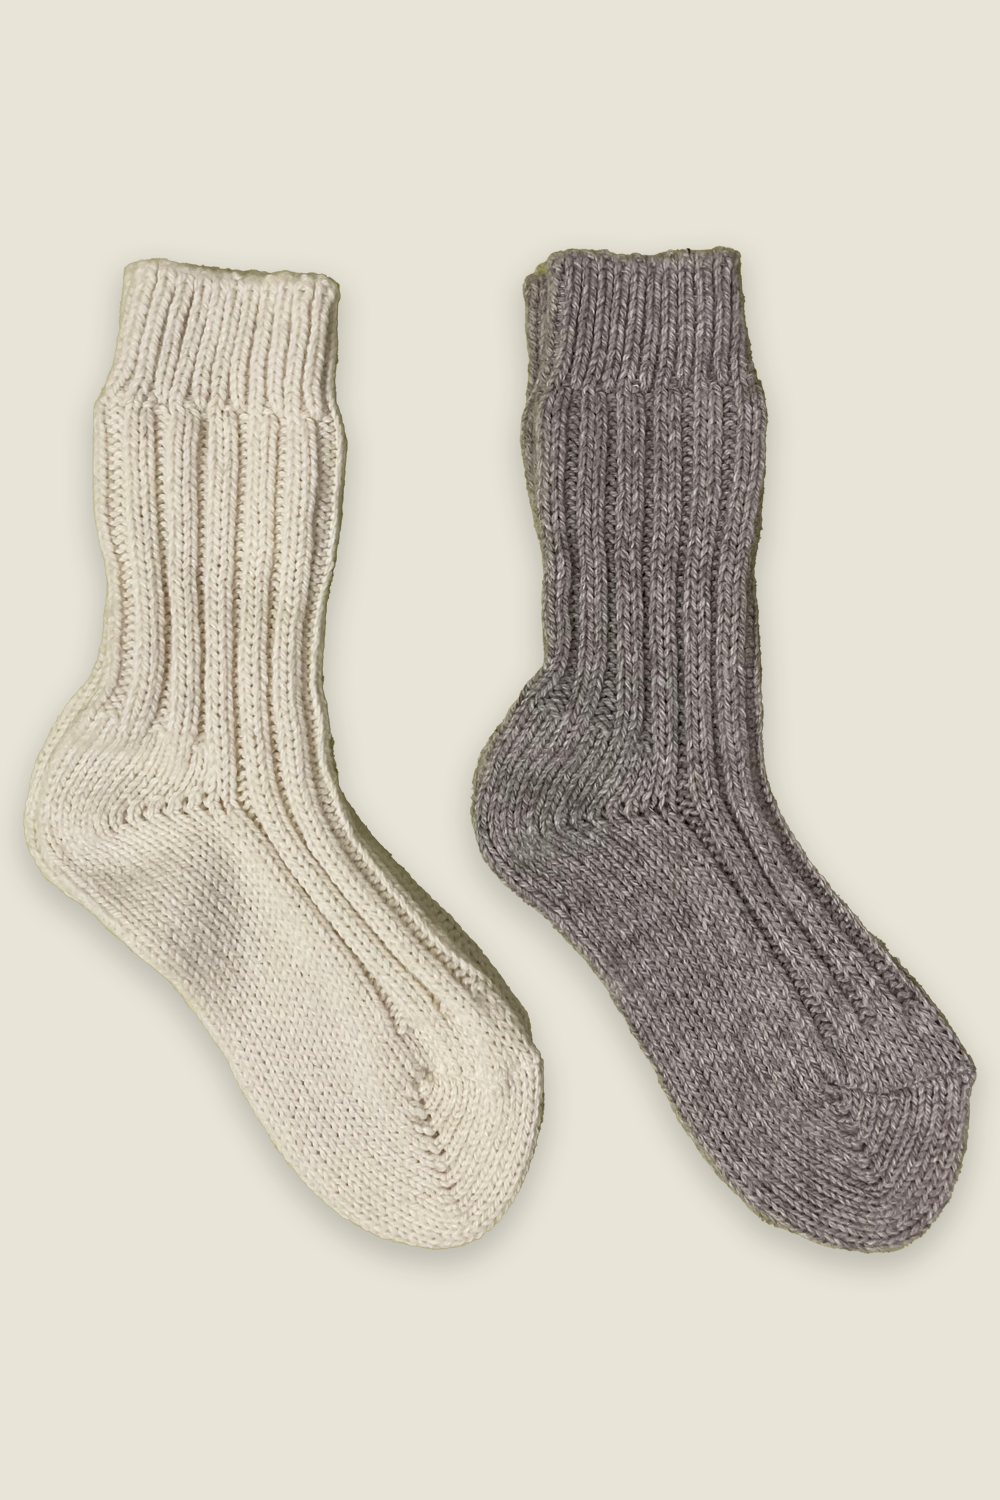 Calzini di alpaca - naturali e grigi - 2 paia